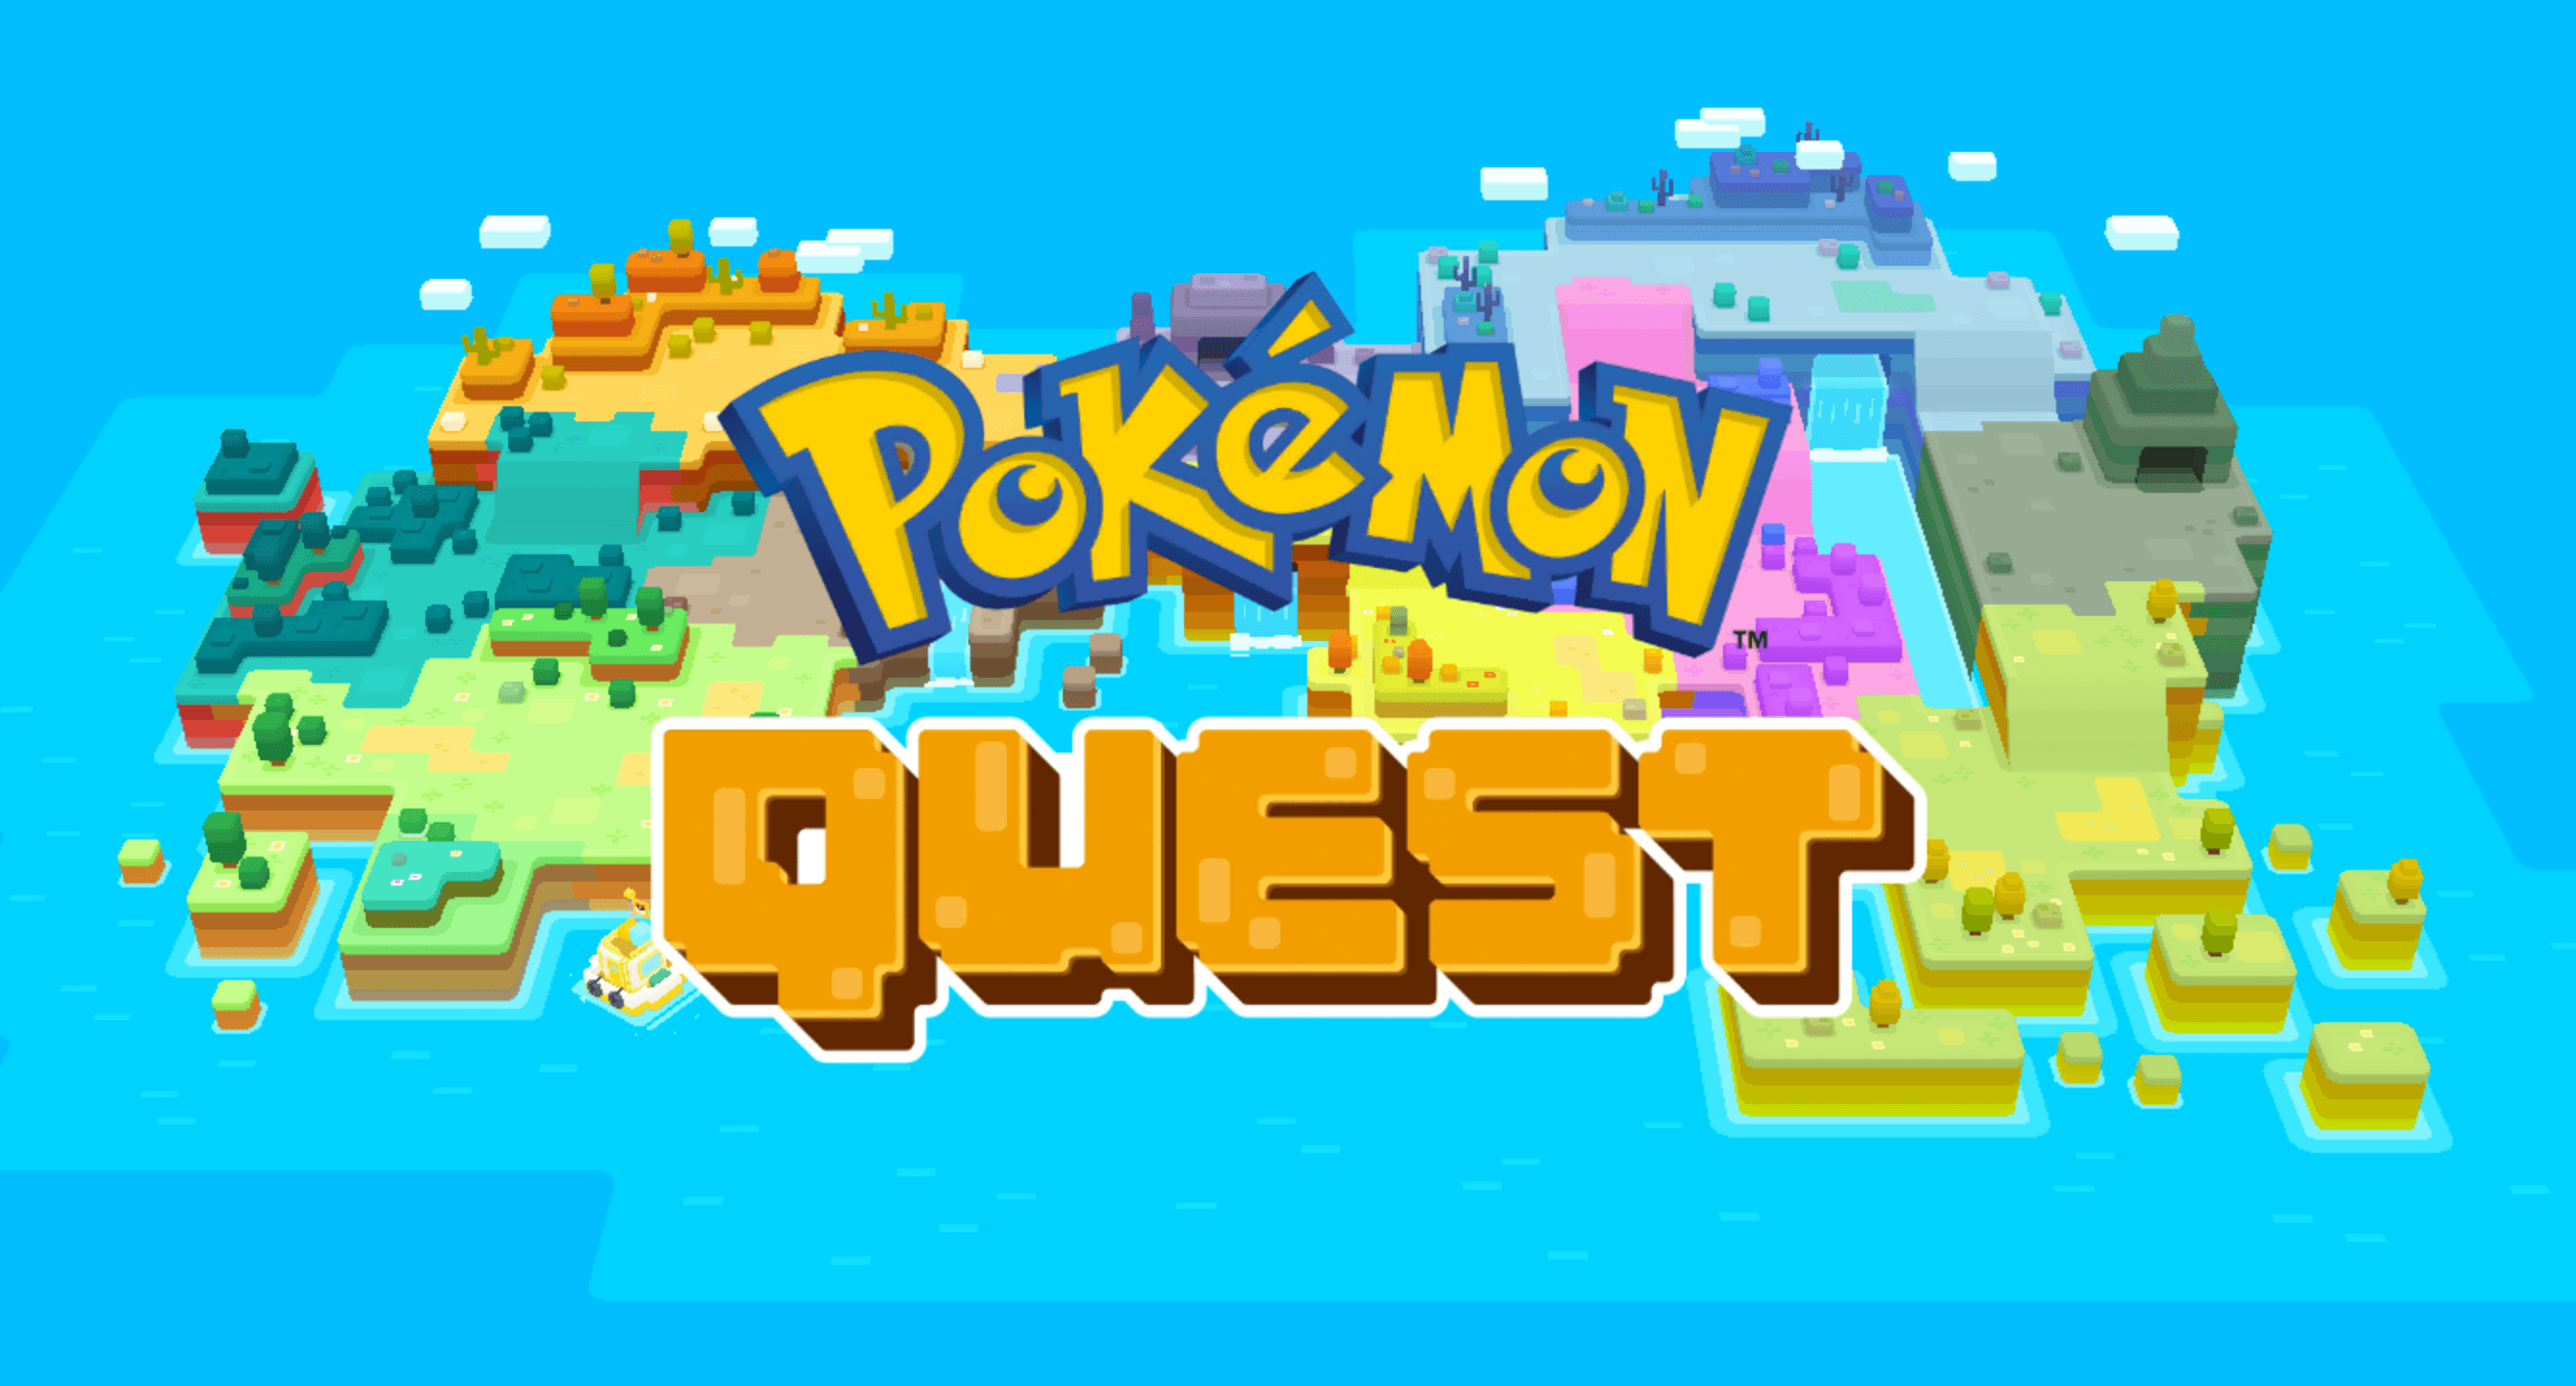 Onix Pokemon Quest Recipes